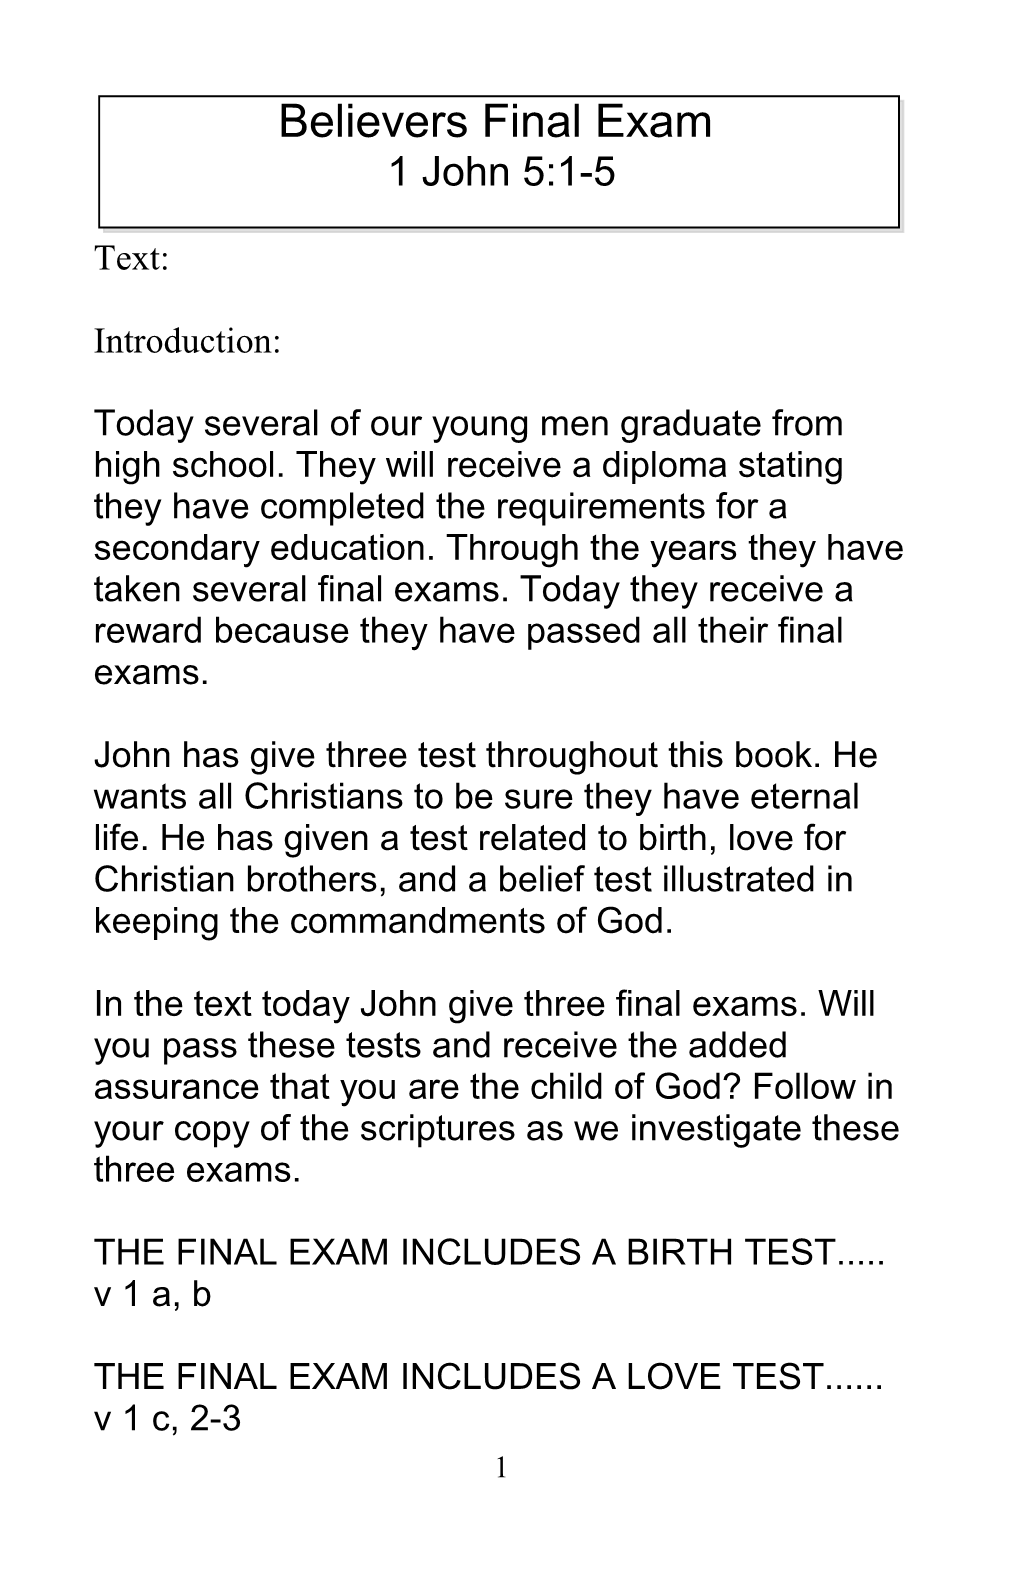 THE FINAL EXAM INCLUDES a BIRTH TEST V 1 A, B